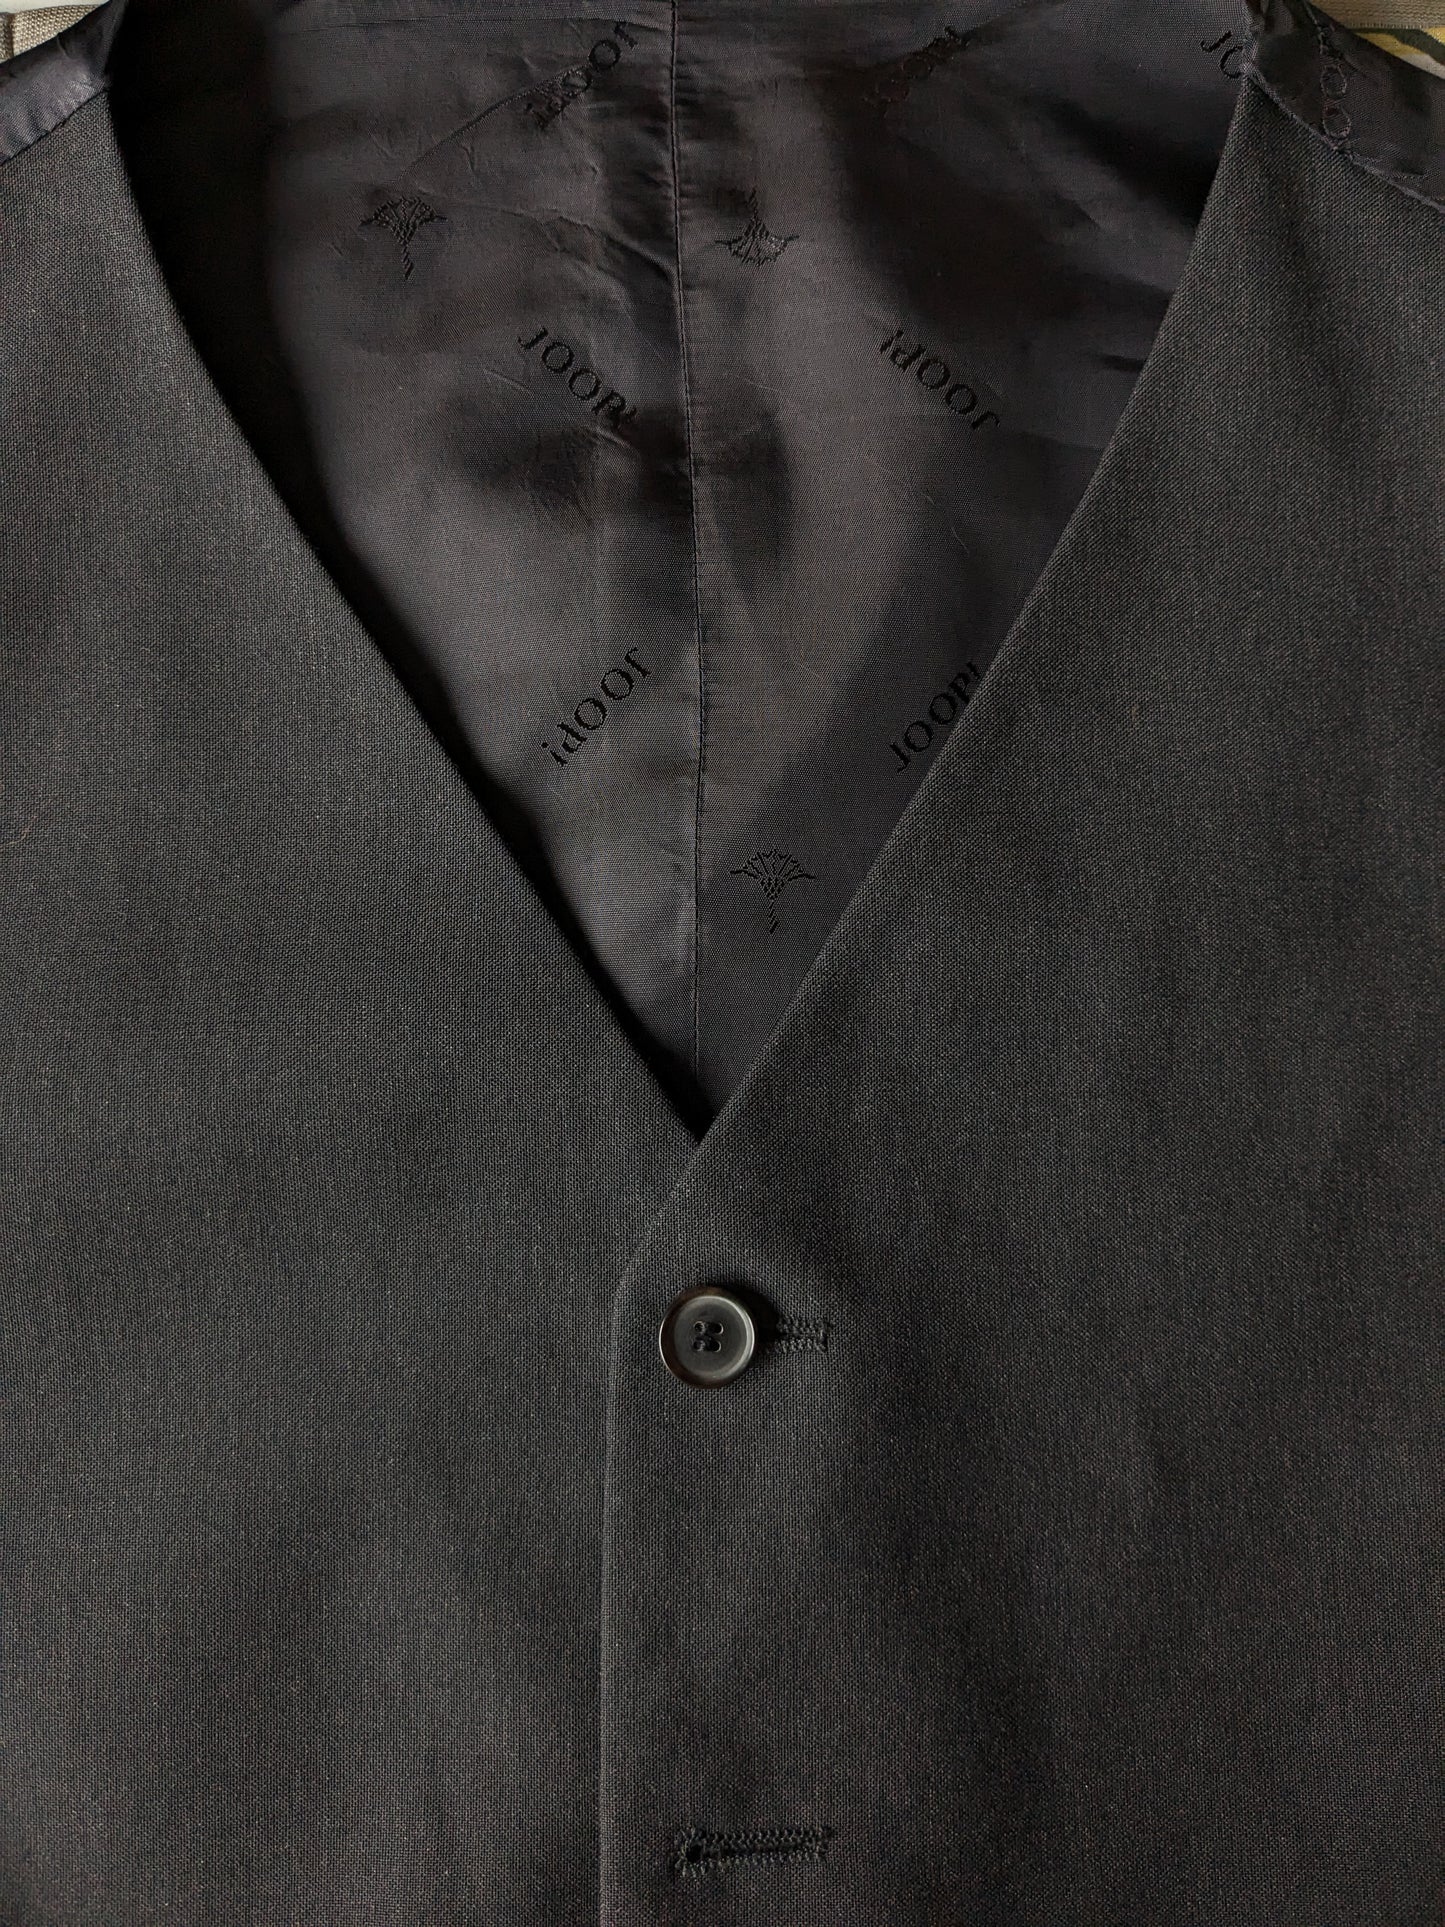 Joop! Waistcoat. Dark gray colored. Size M / L. #332.